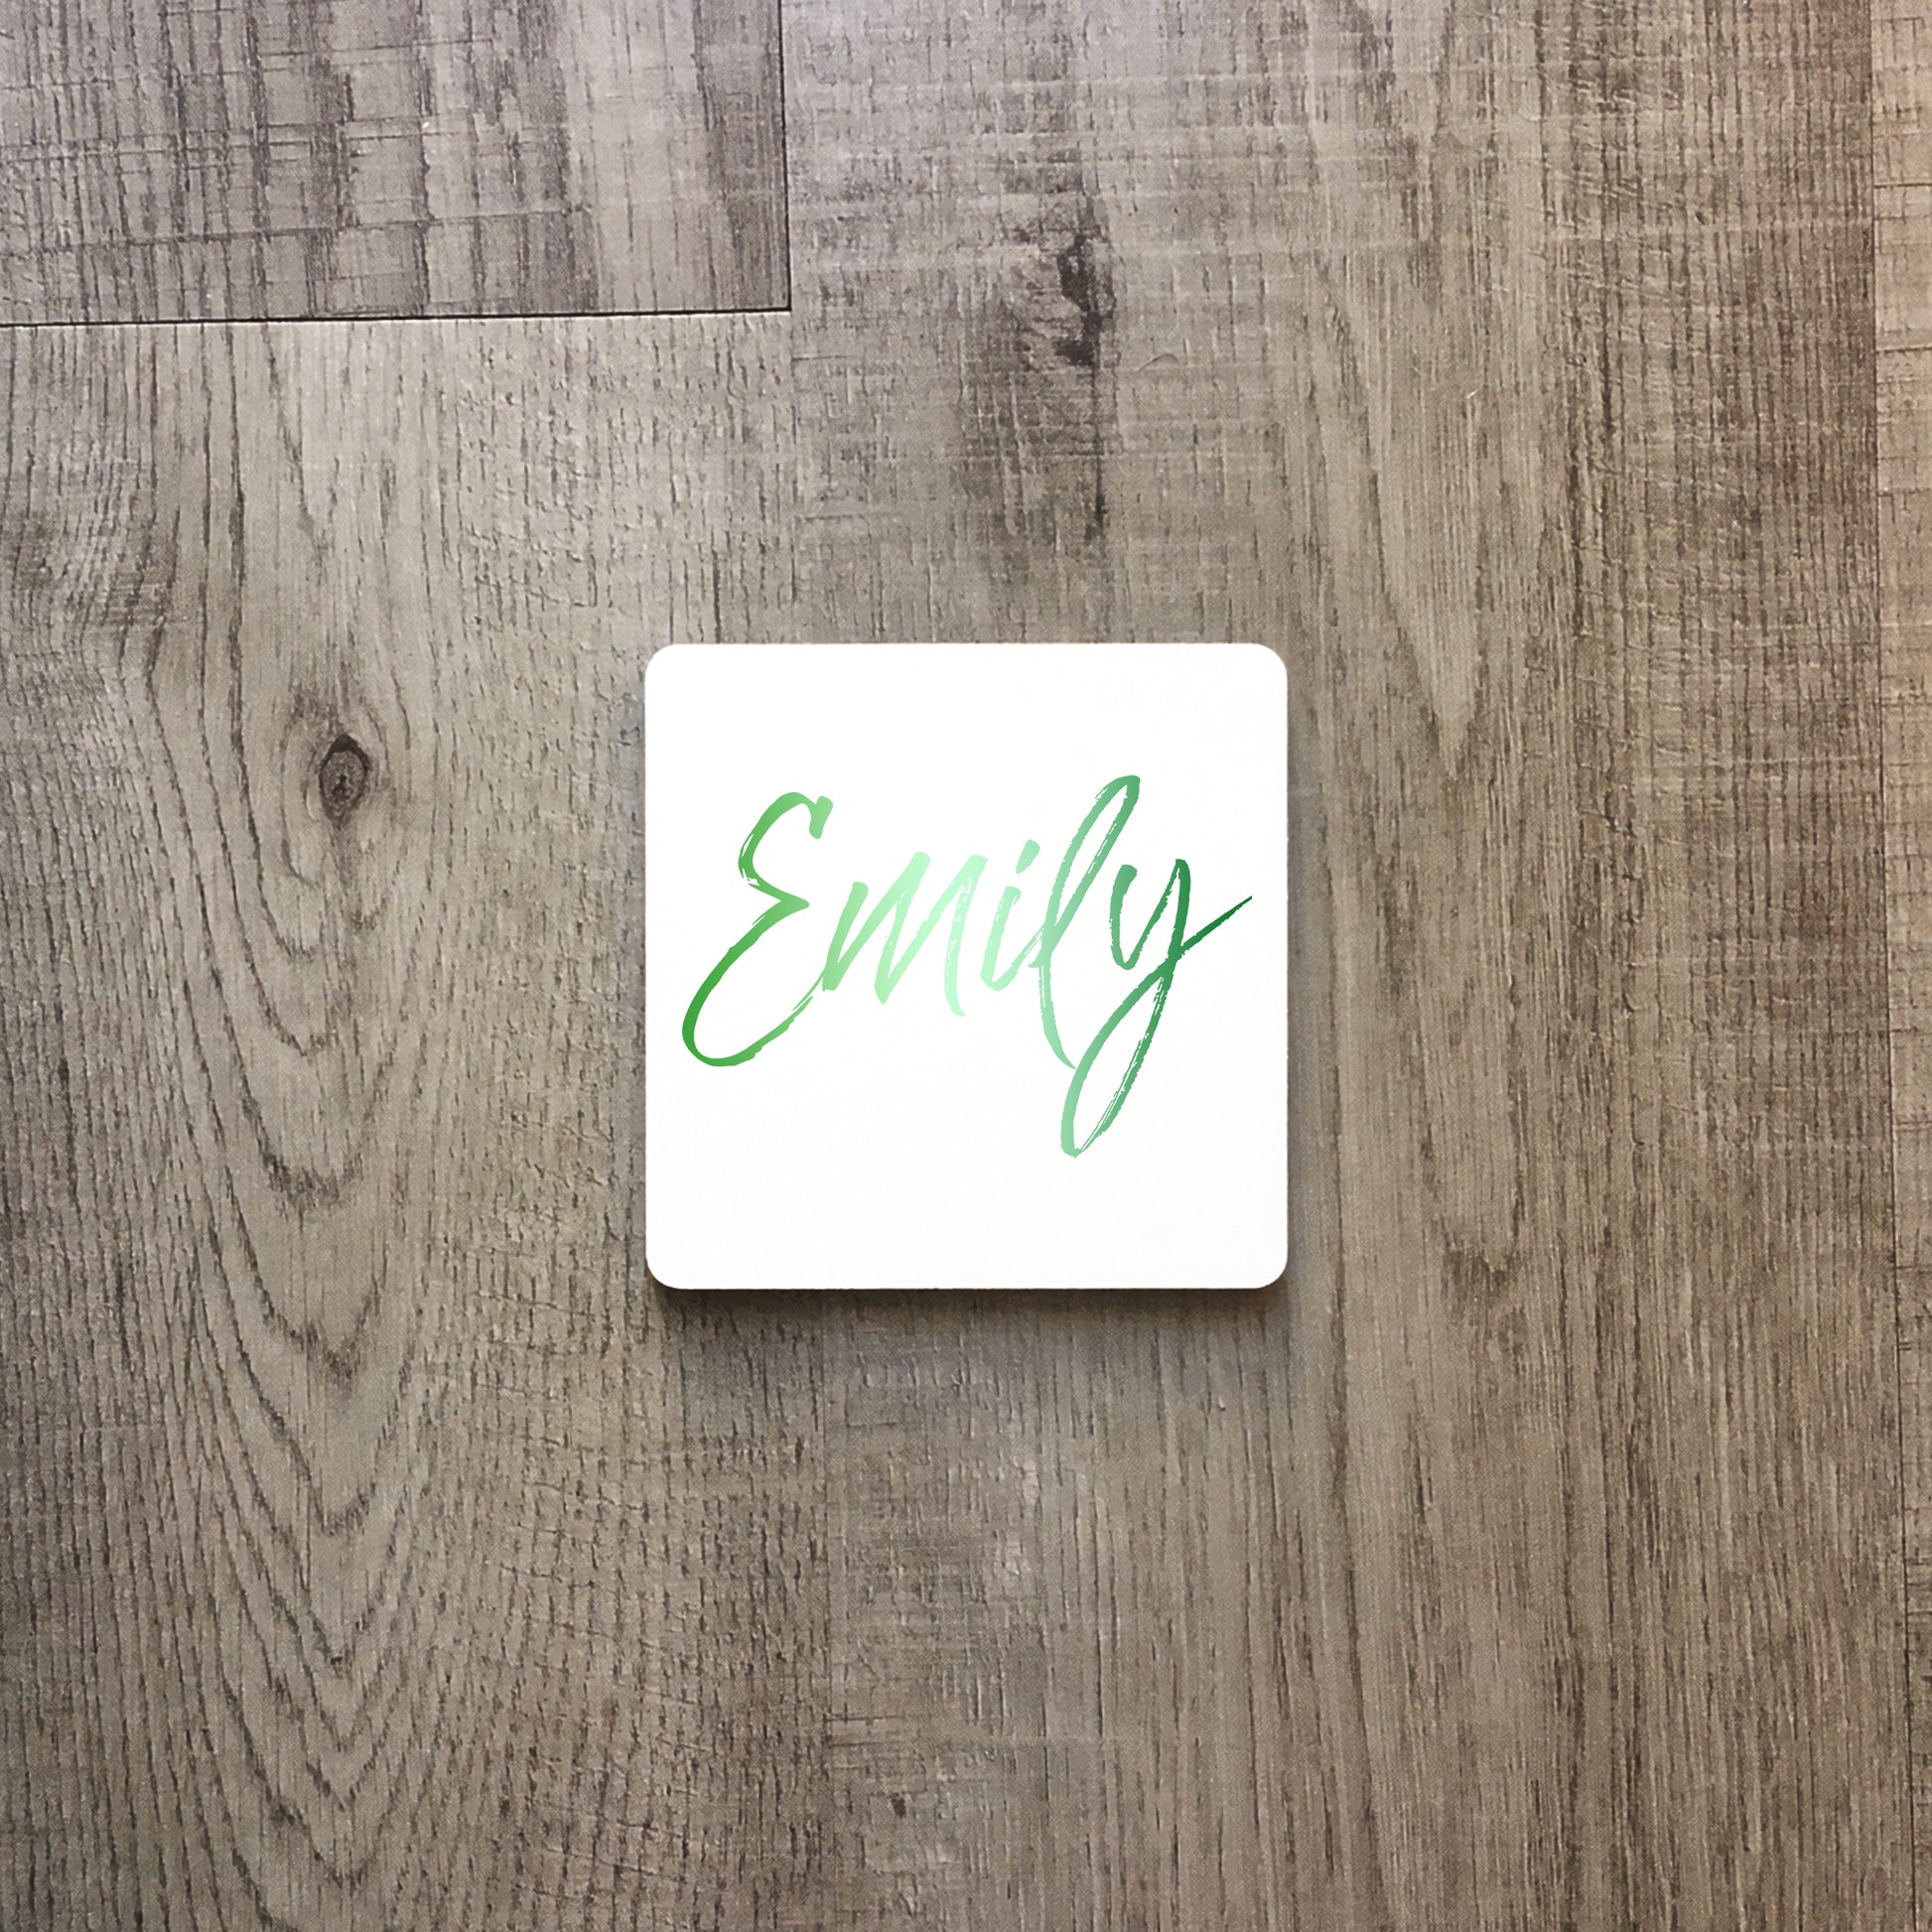 Green ombre personalised name | Enamel mug-Enamel mug-Adnil Creations